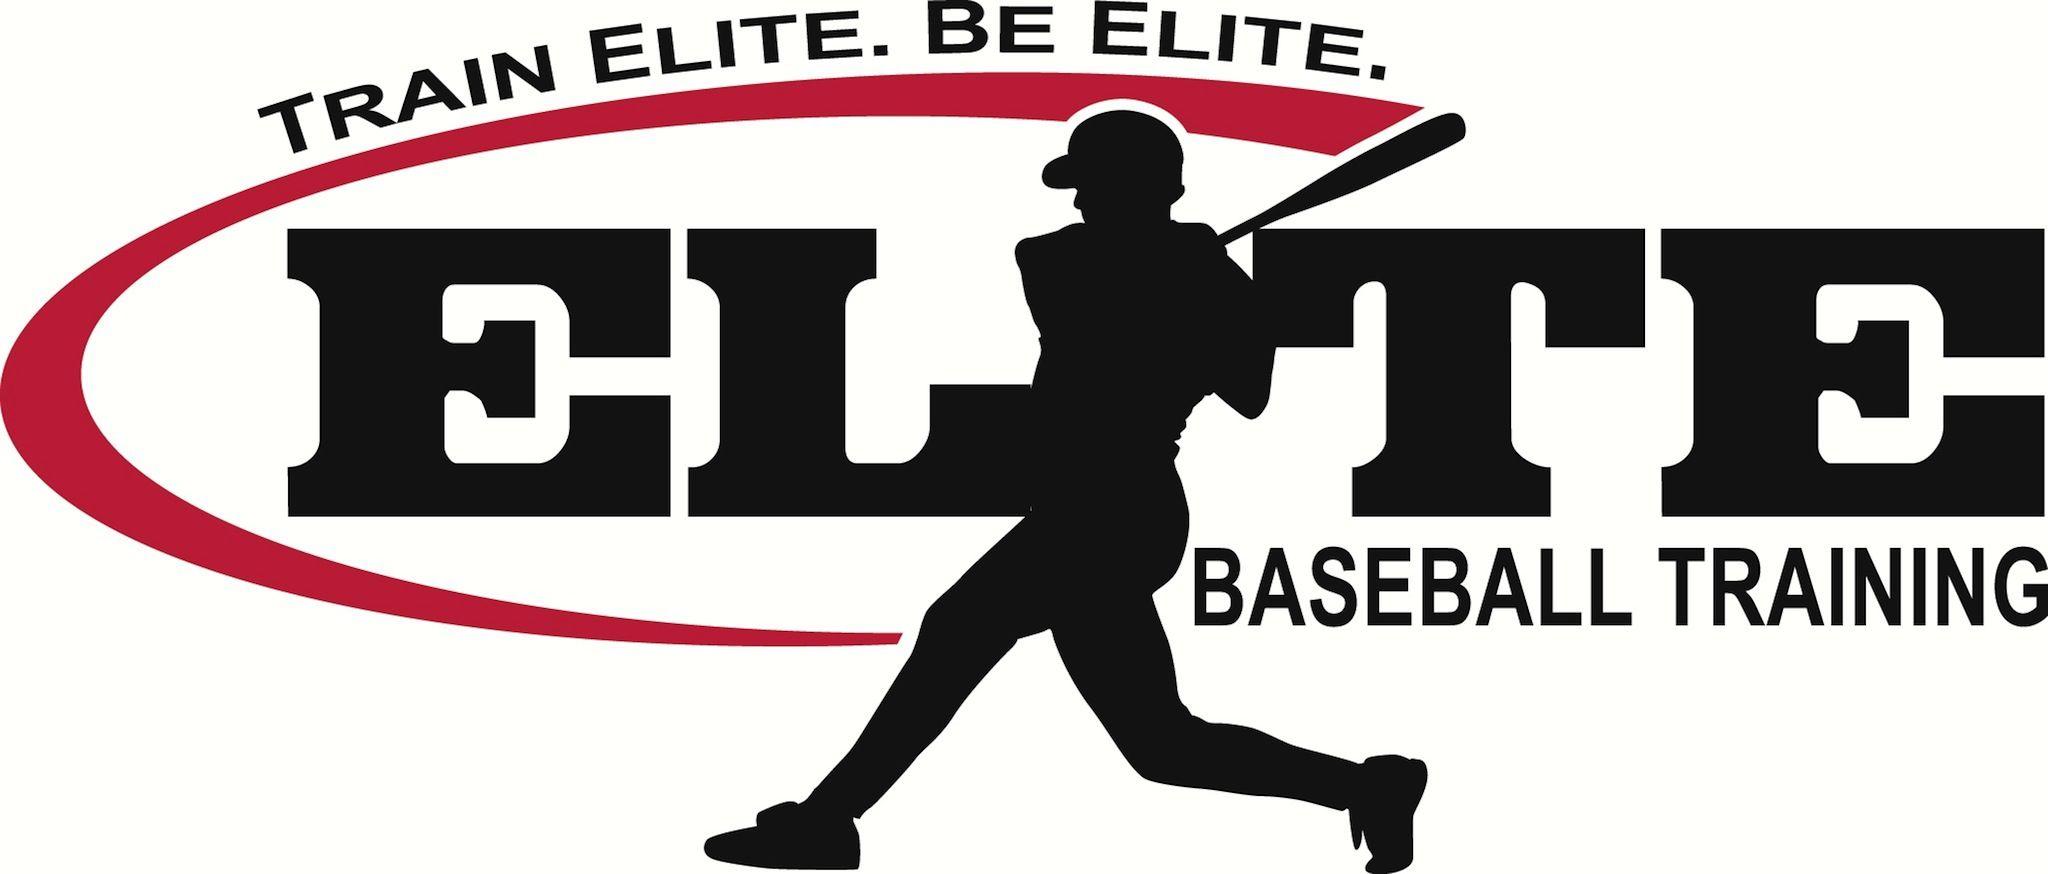 elite travel baseball teams in ohio